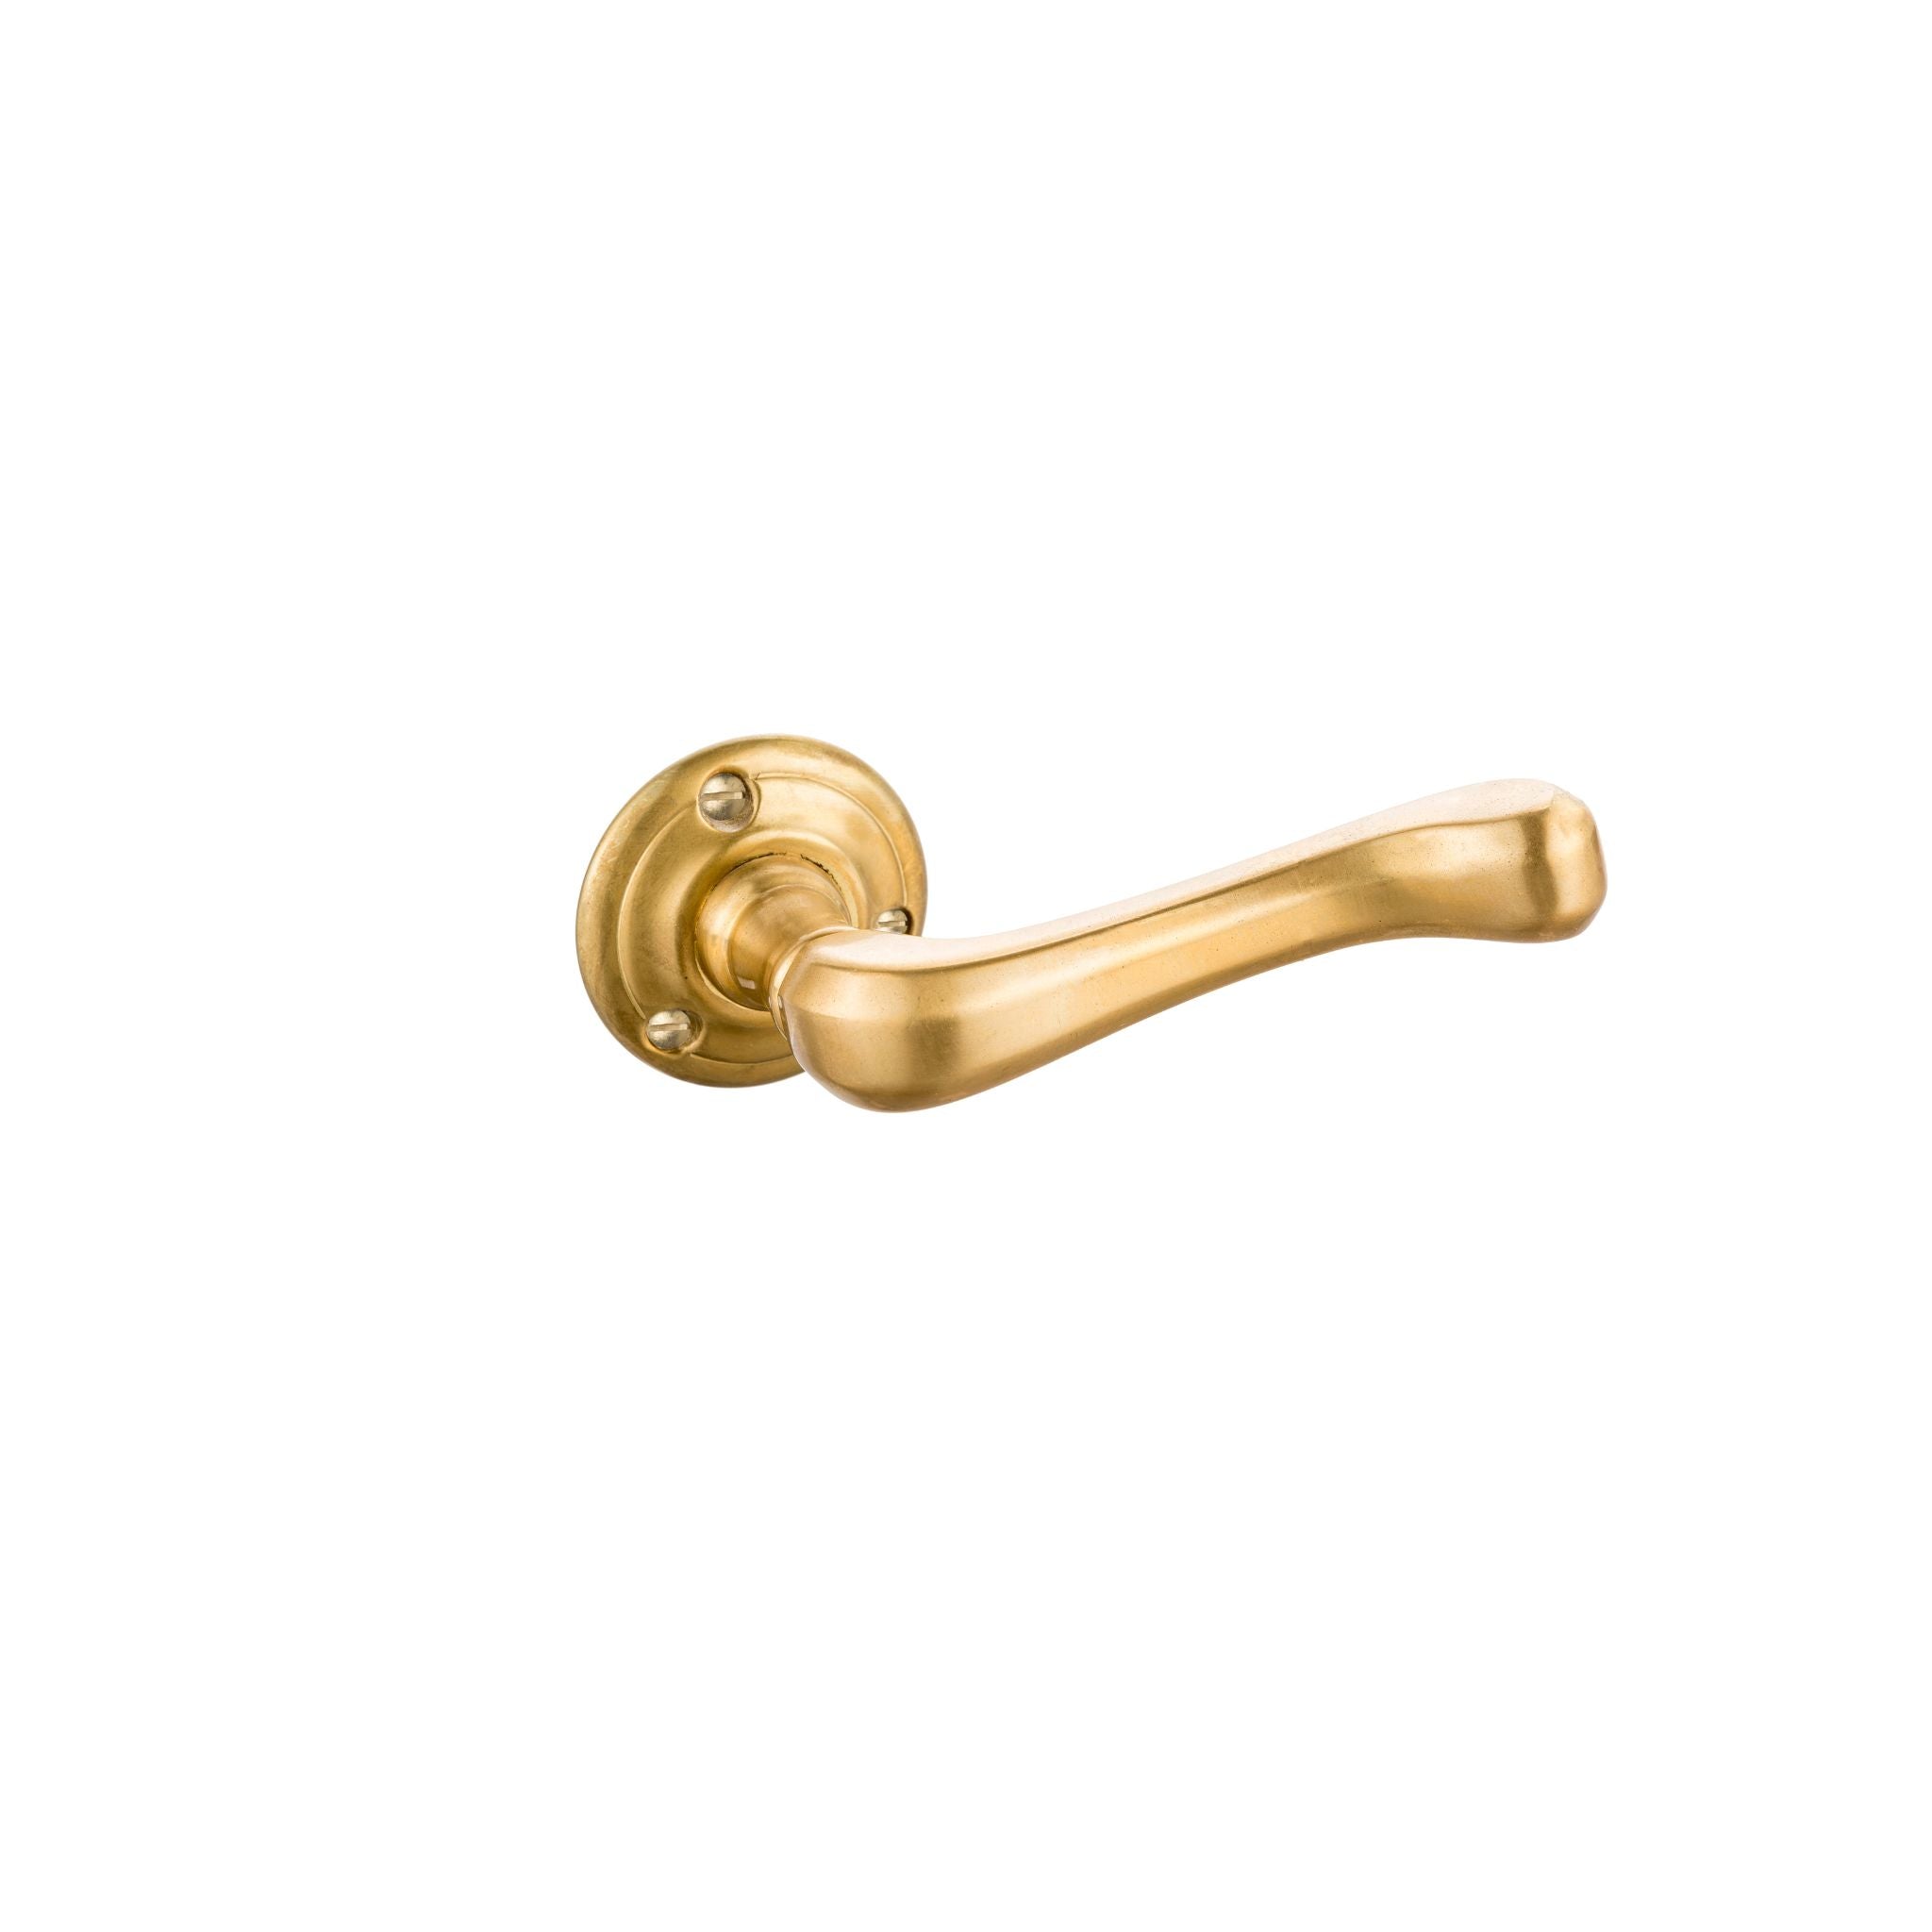 Novecento brass simple small door handle - ilbronzetto